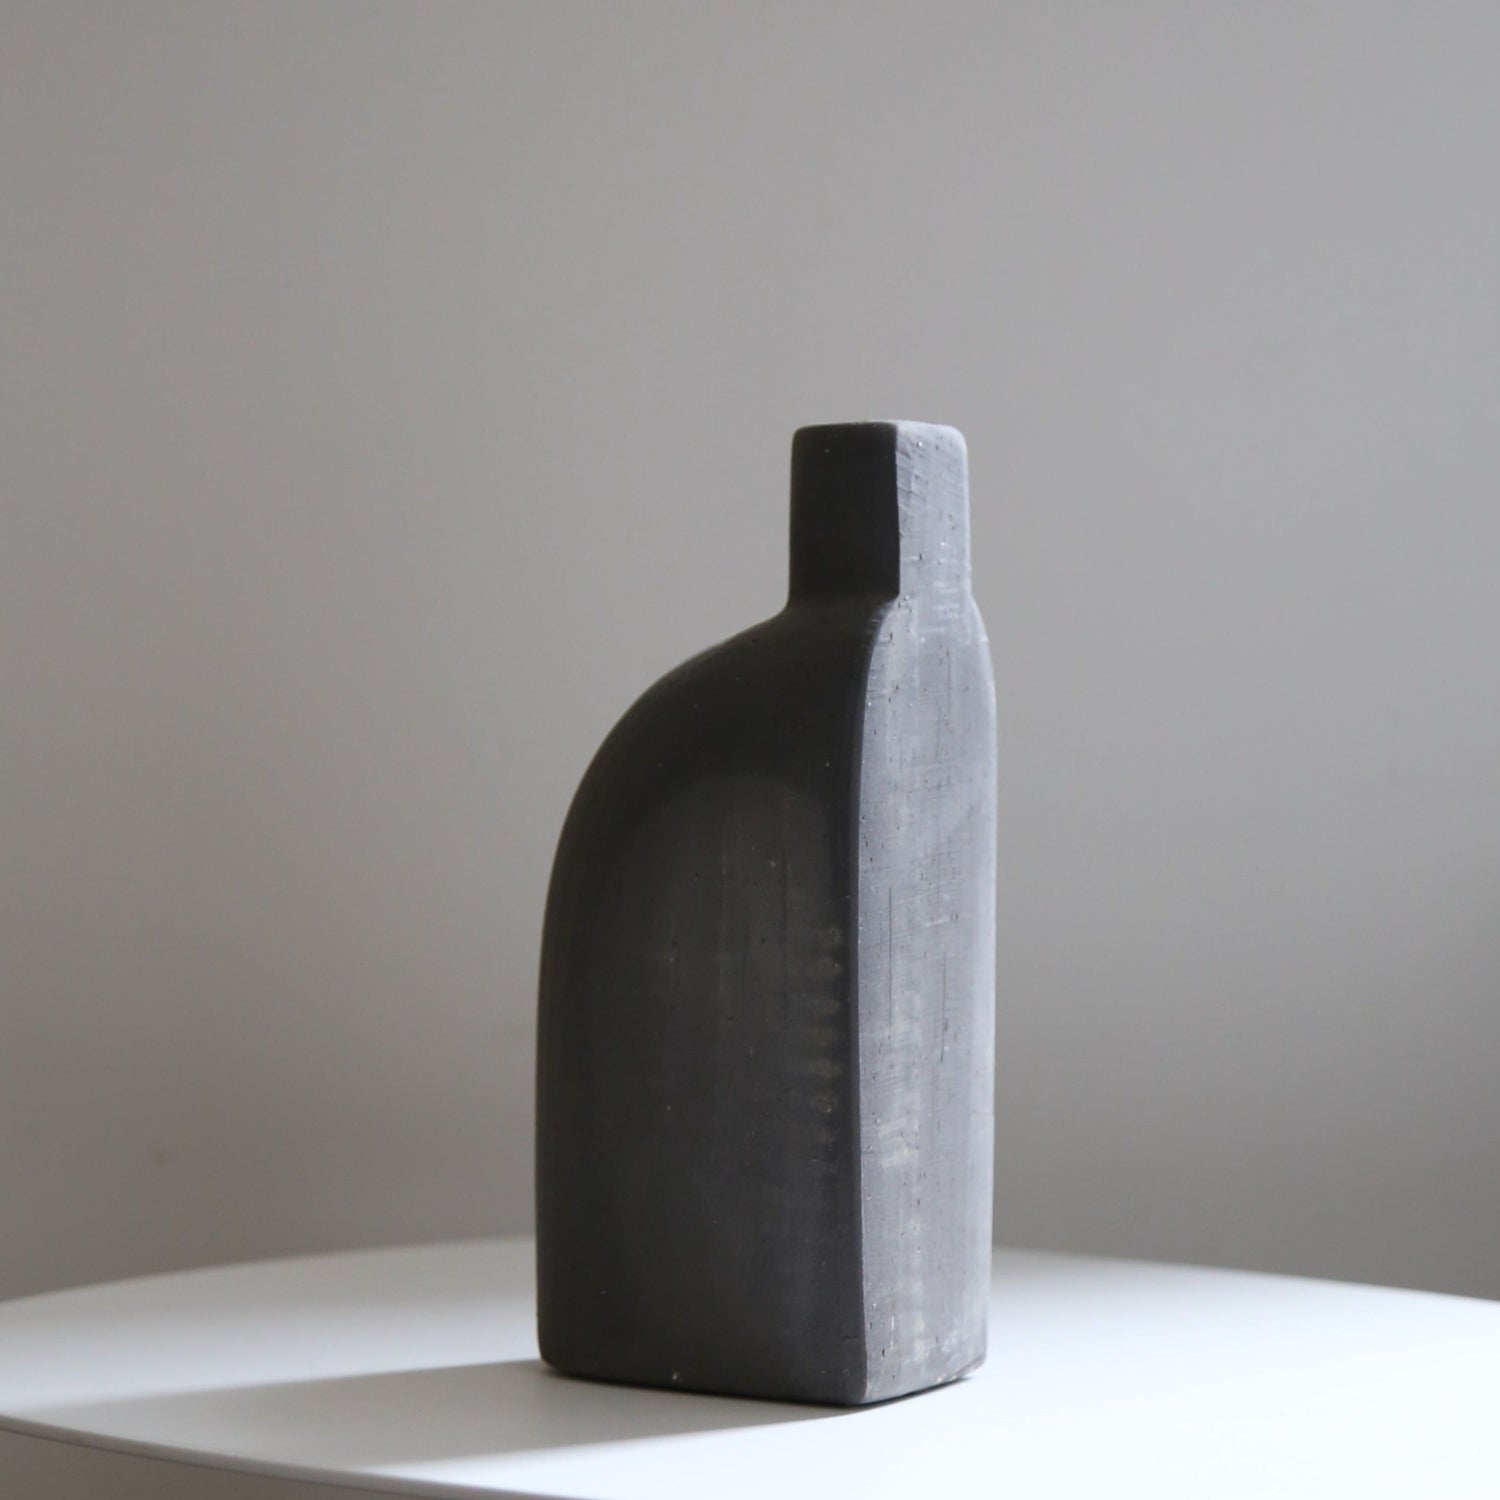 Black ceramic bud vase set available at Rook & Rose.